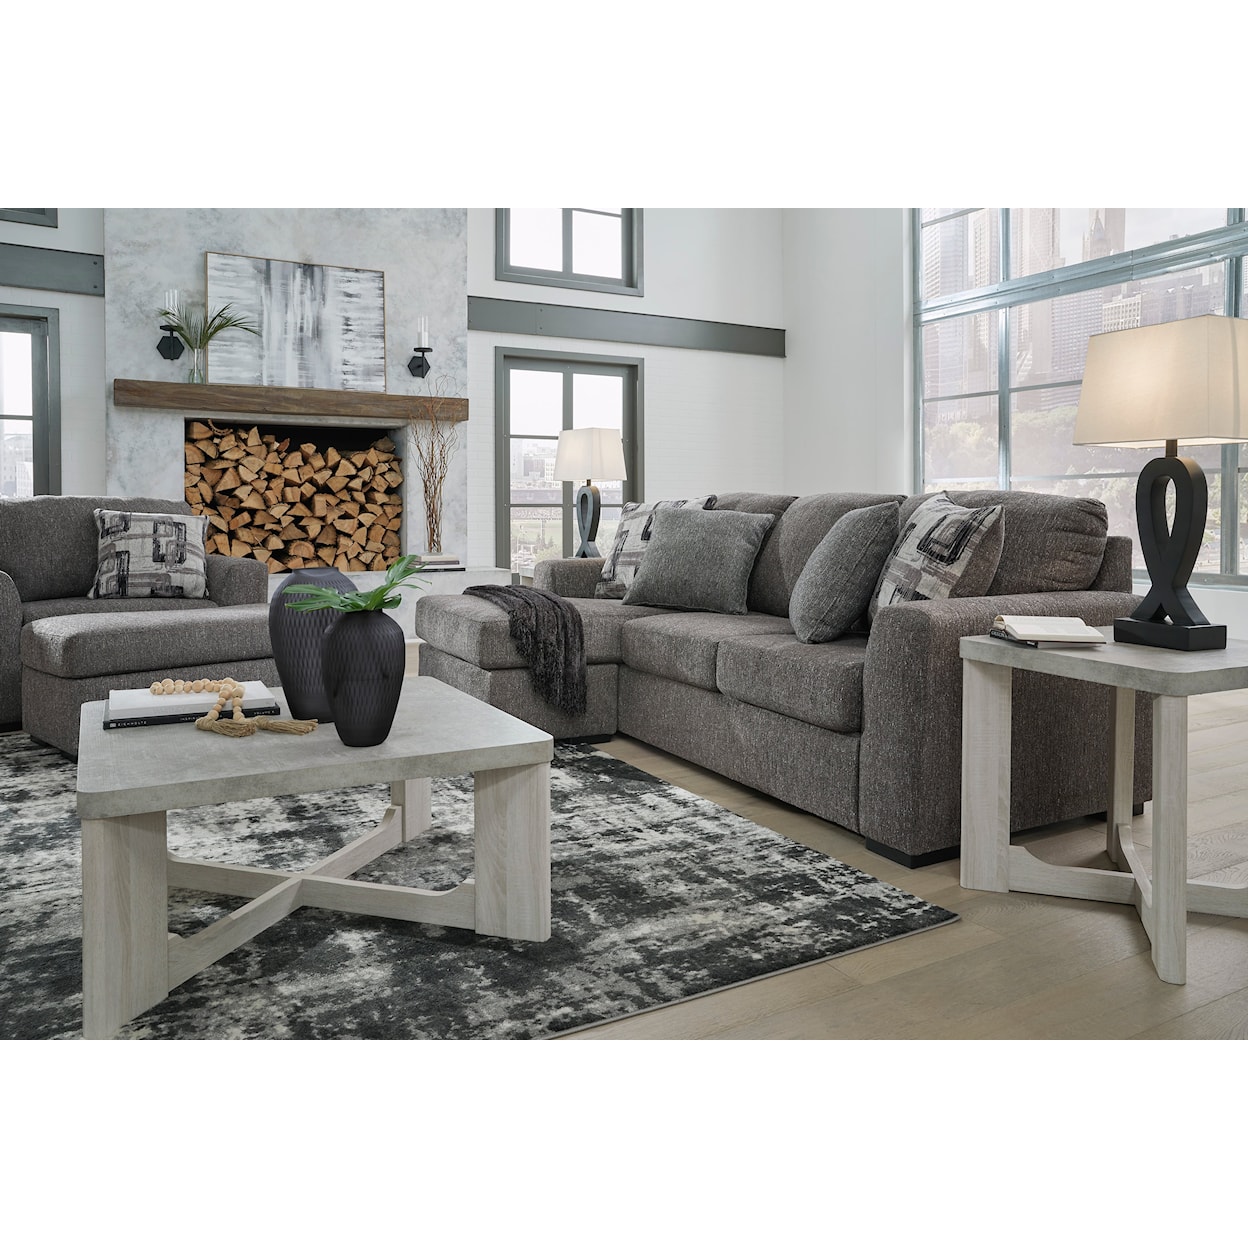 Ashley Furniture Signature Design Gardiner Living Room Set